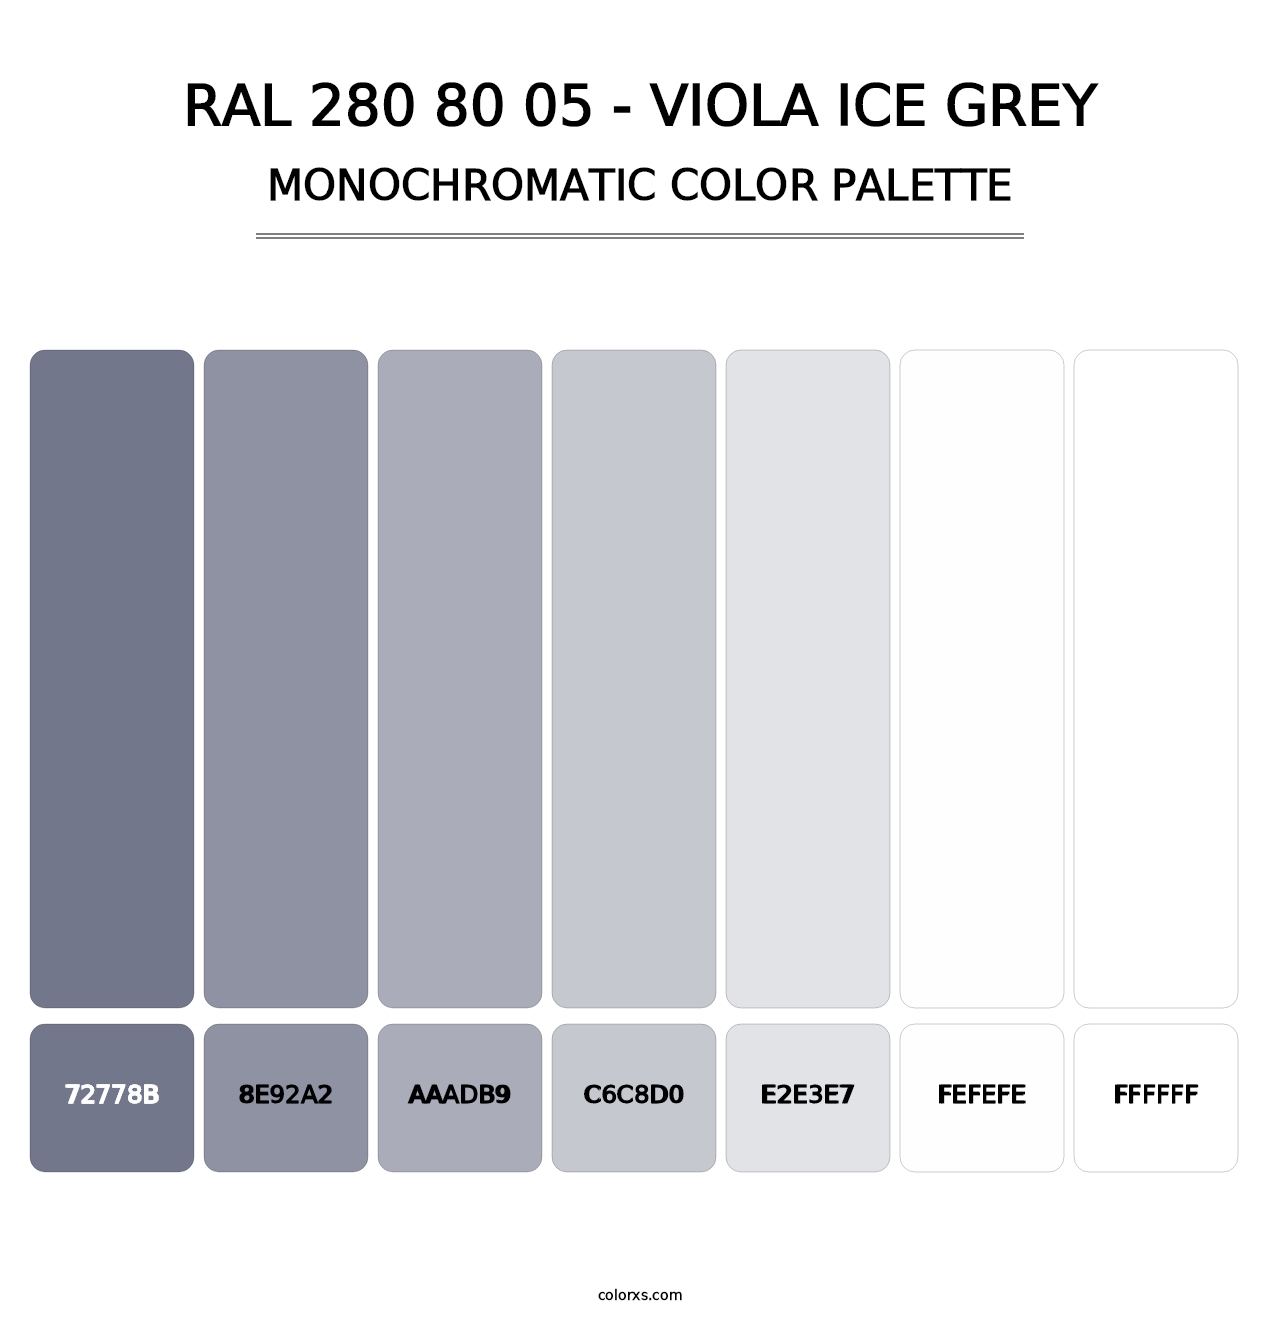 RAL 280 80 05 - Viola Ice Grey - Monochromatic Color Palette